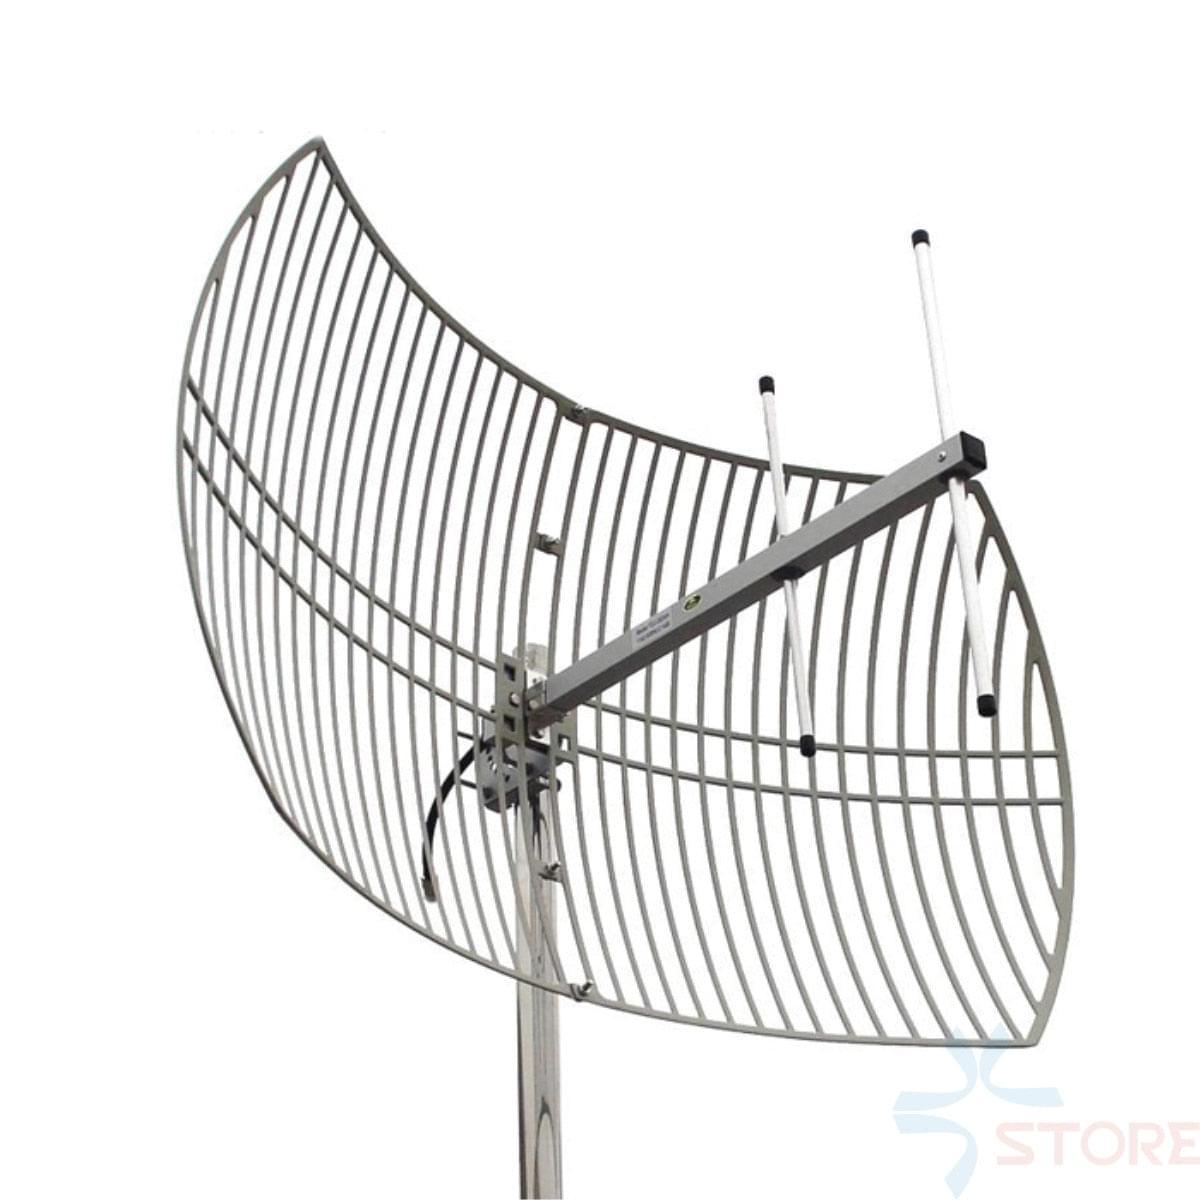 1.2G 15dBi High Gain Directional Parabolic Grid Antenna For Video Transmission FPV RC Airplane - RCDrone